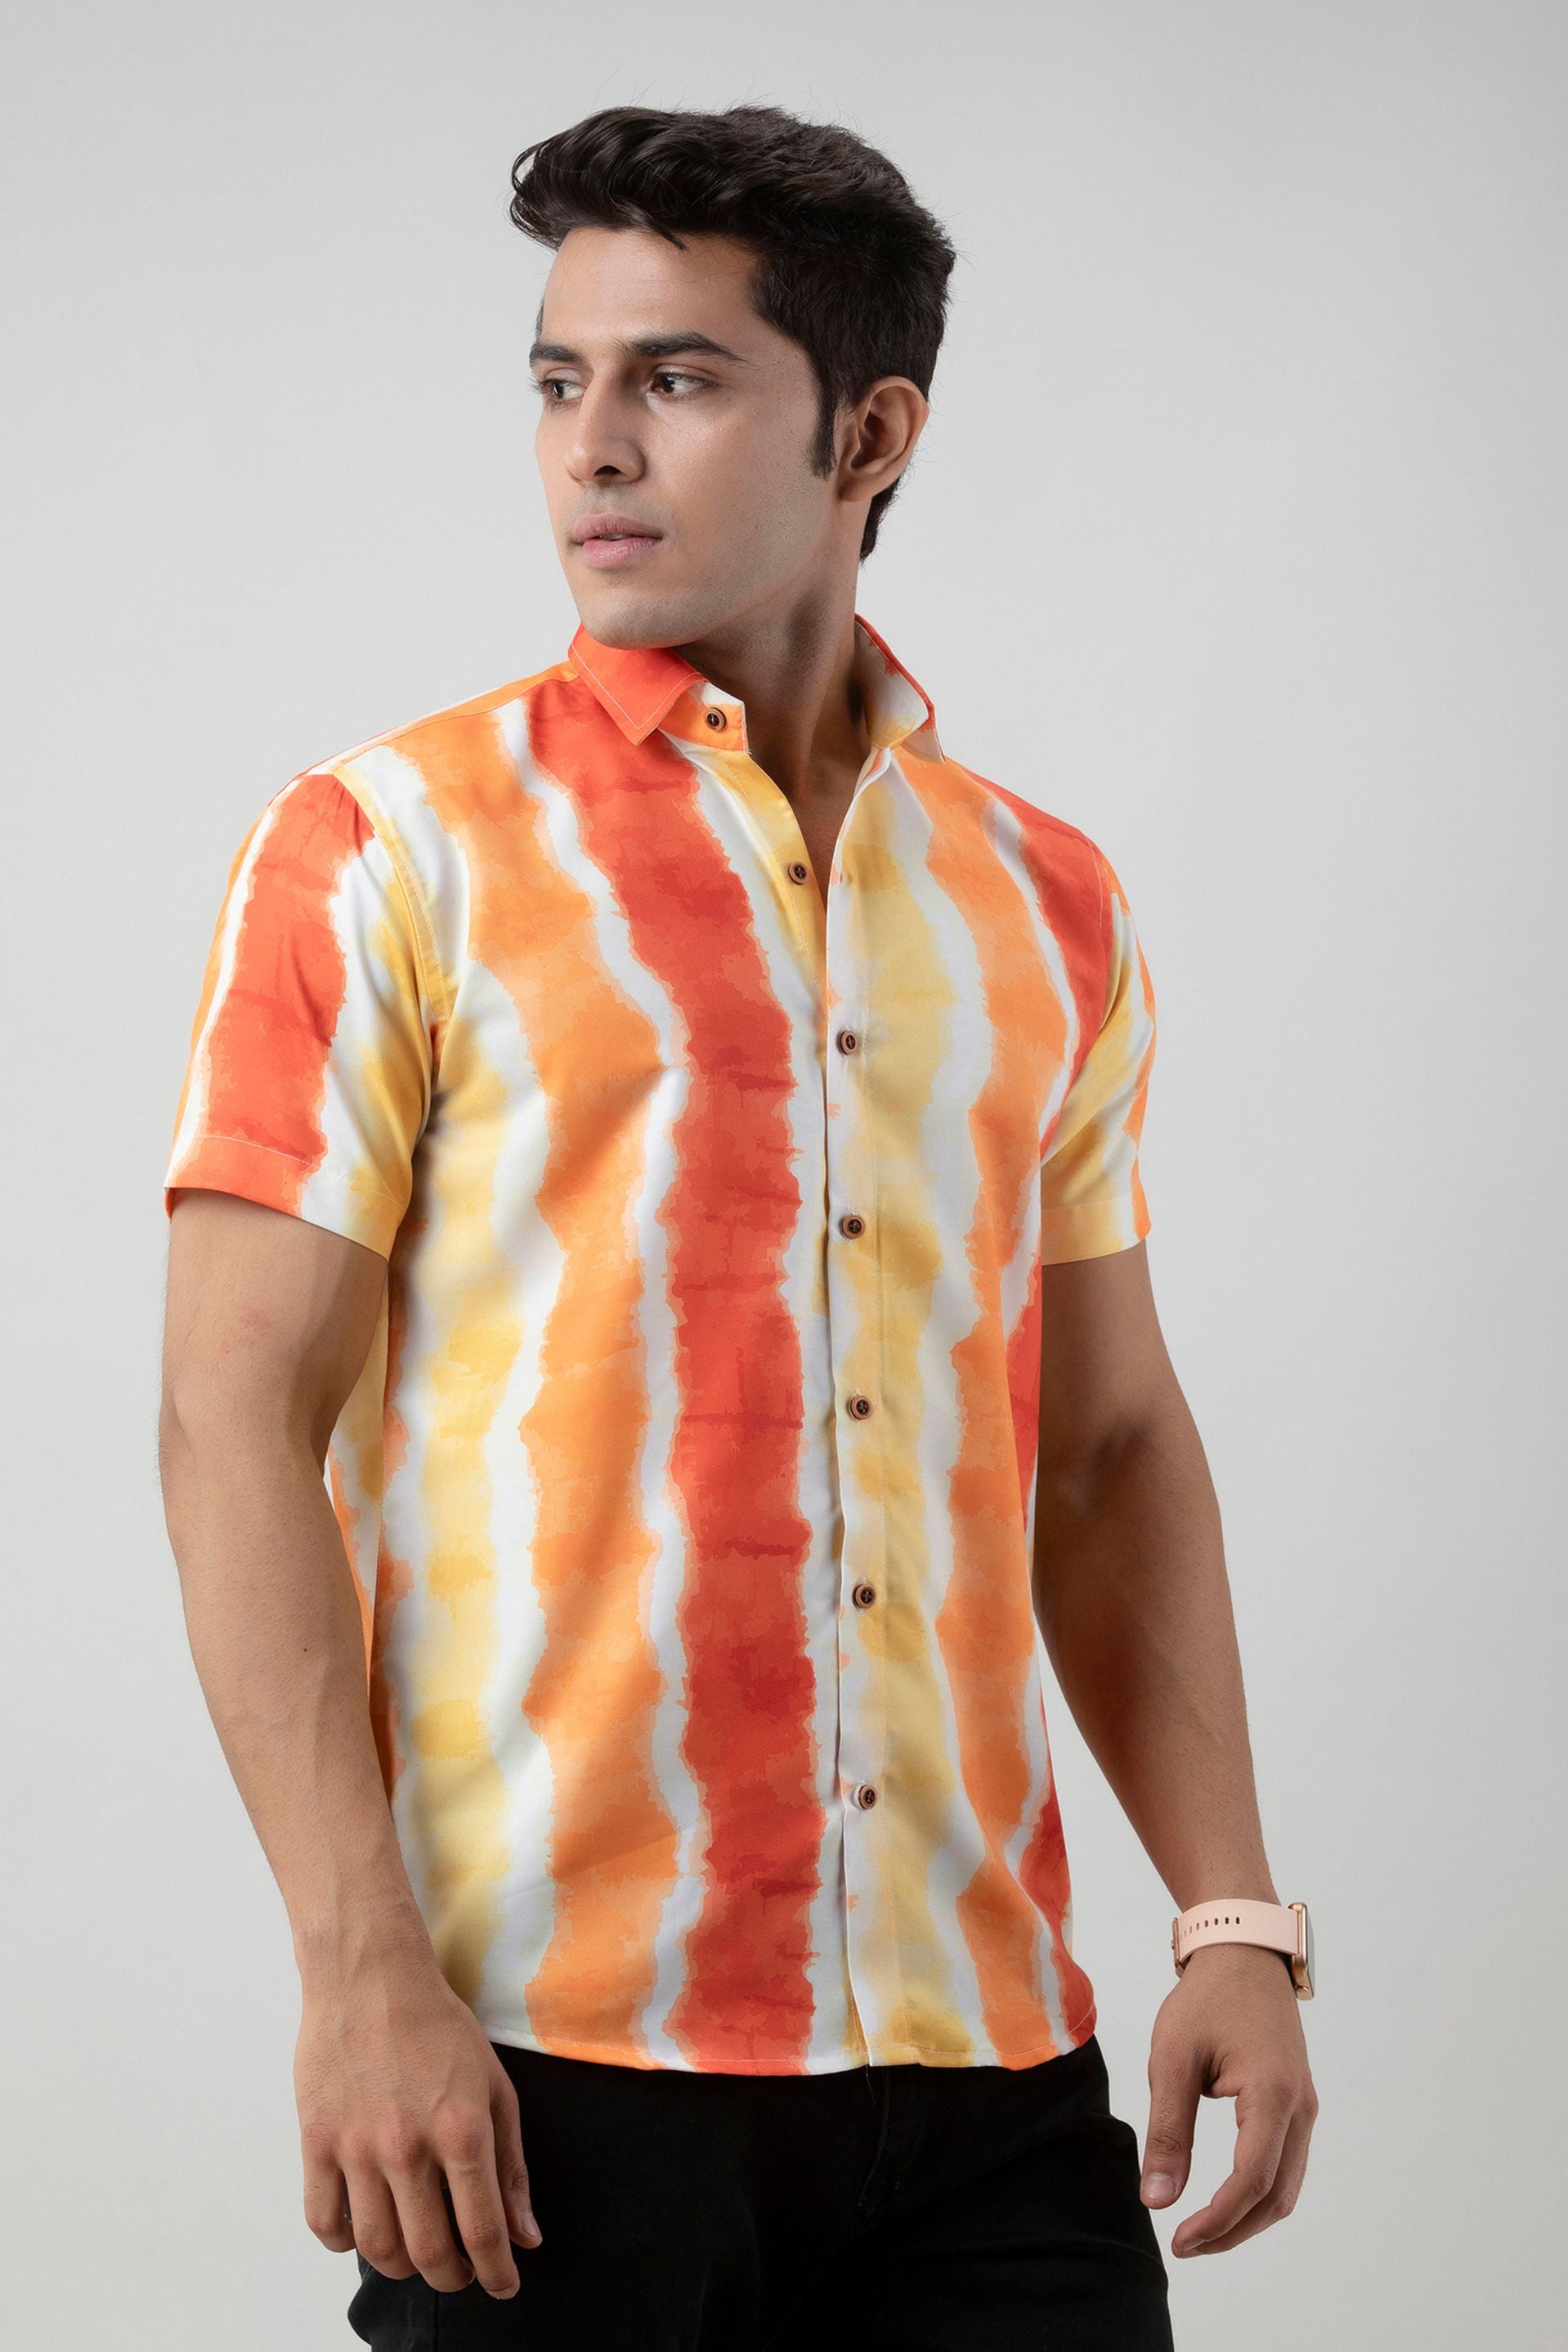 Firangi Yarn Oren Tie&Dye Printed Shirt-Orange/Yellow